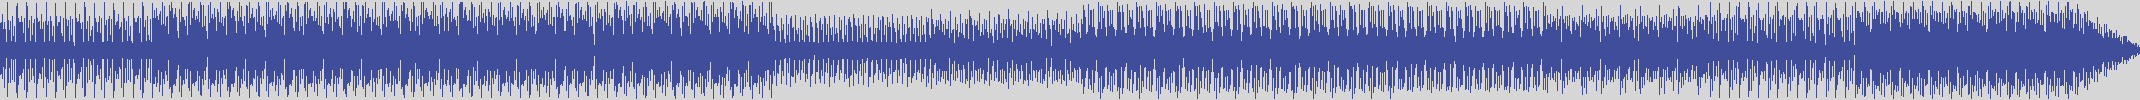 nf_boyz_records [NFY057] Nj Smart - Deja Vu [Original Mix] audio wave form